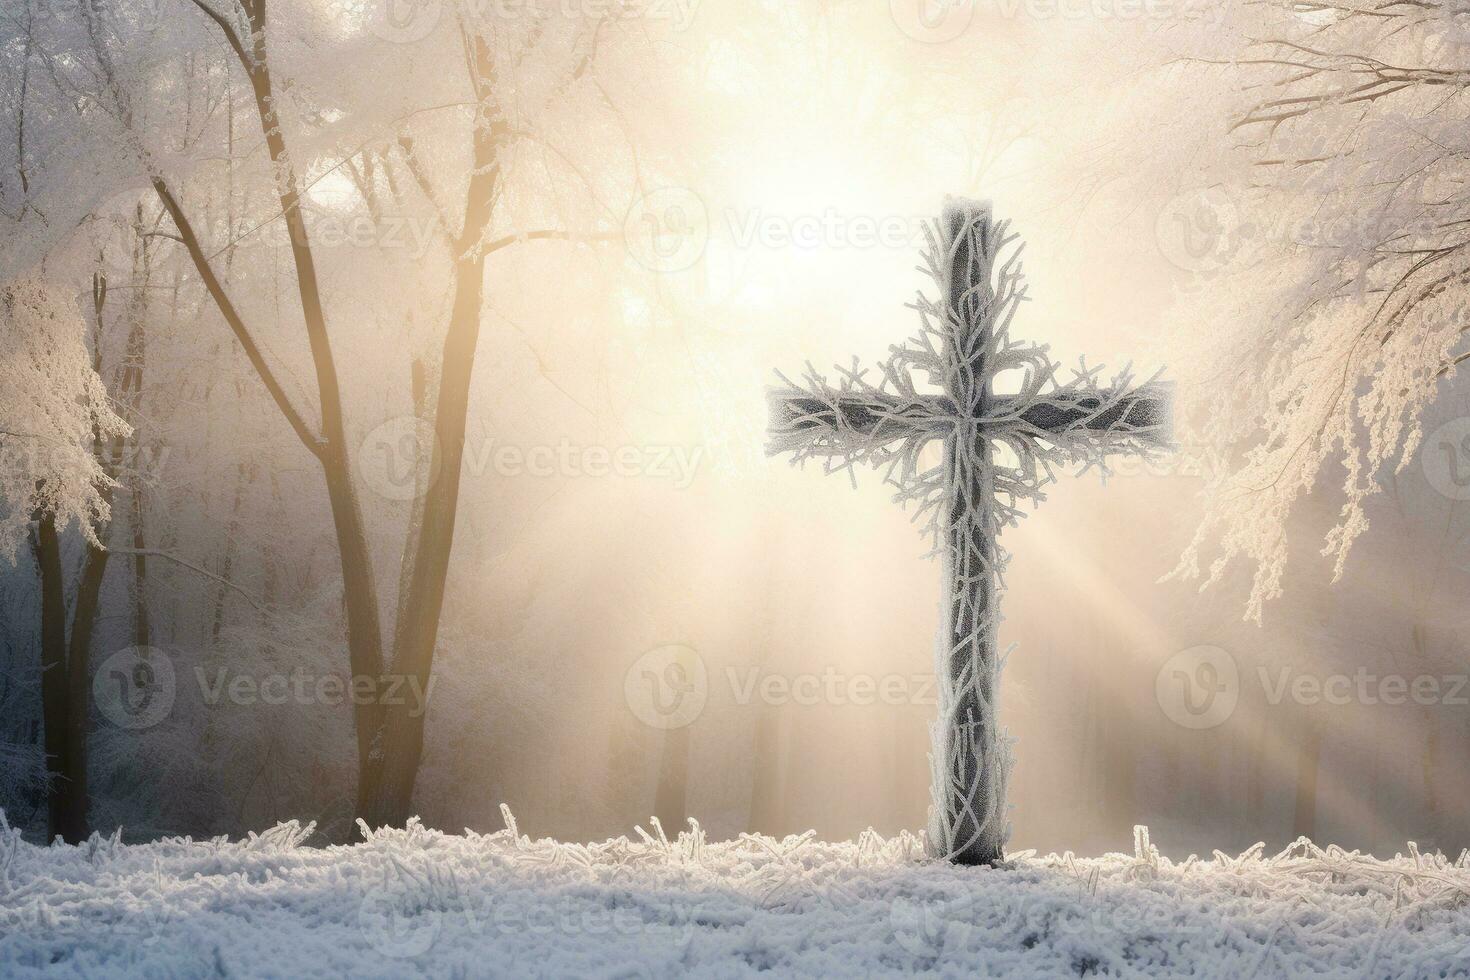 ai genererad korsa i de vinter- skog. kristen korsa i de snöig skog. foto